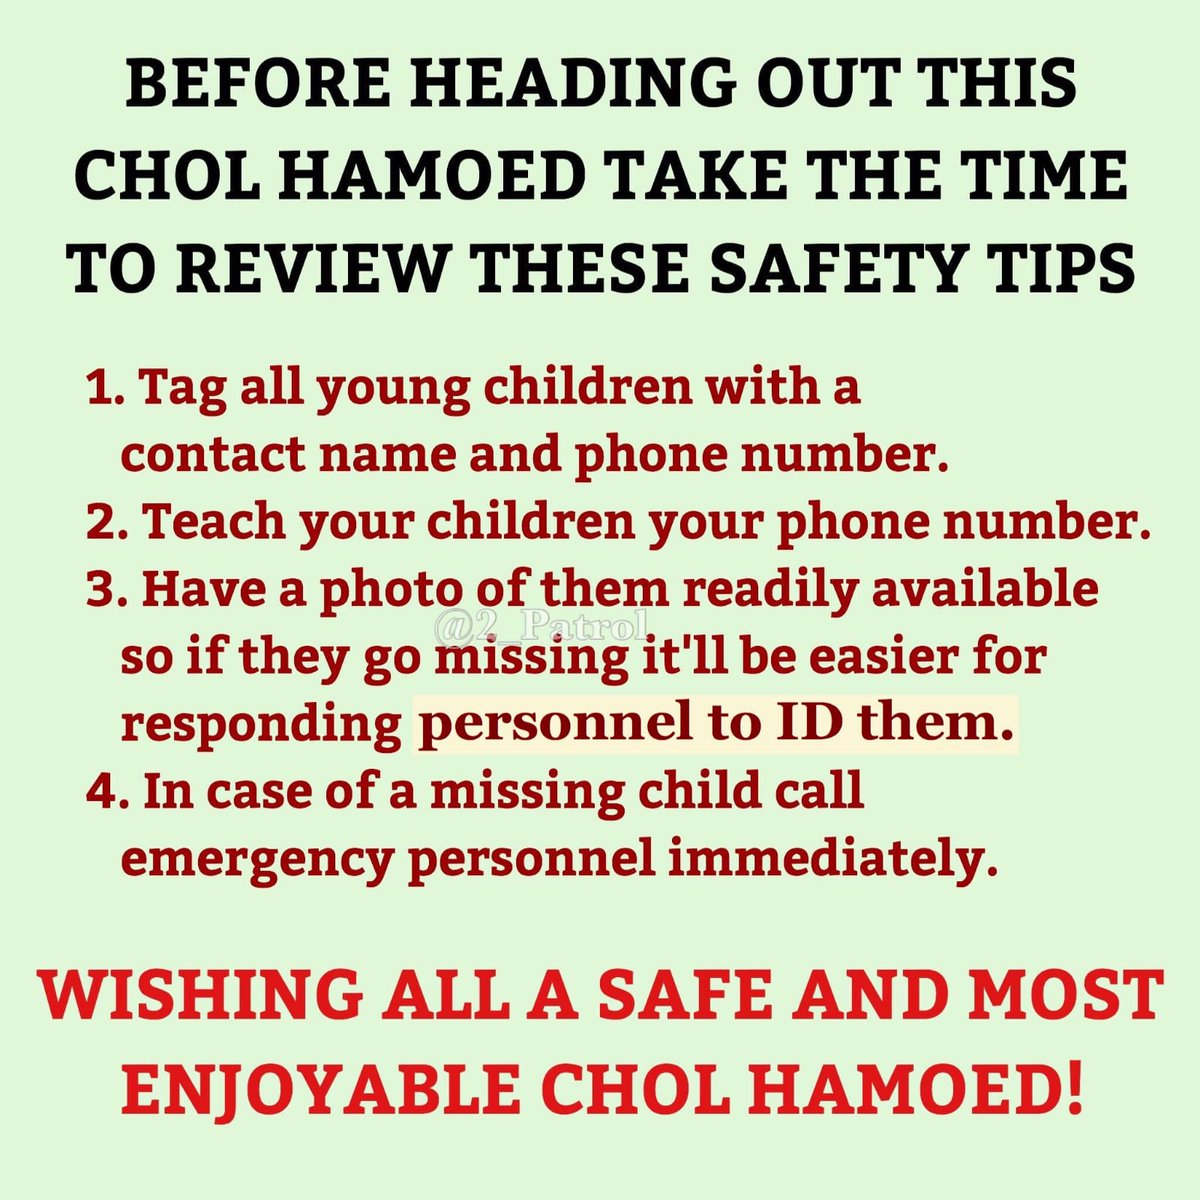 Please take note of these #CholHamoed #SafetyTips #StaySafe